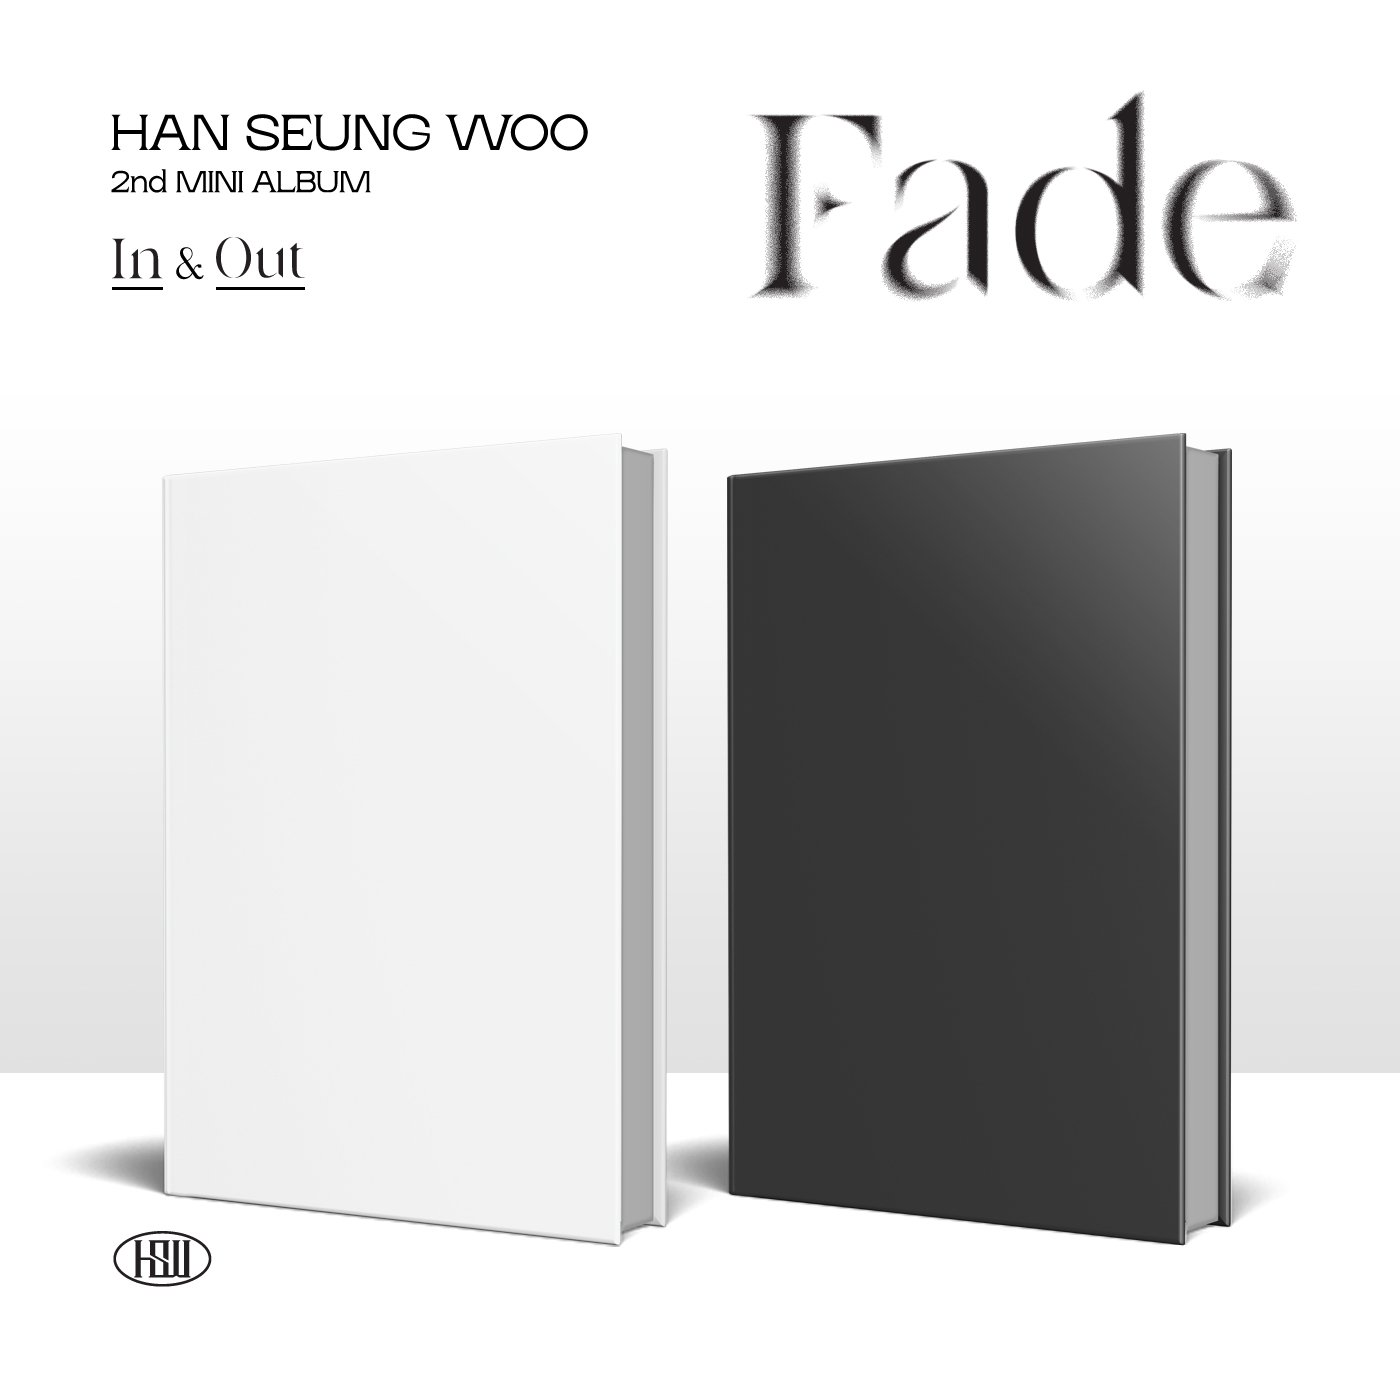 HAN SEUNGWOO - 2ND MINI ALBUM [FADE]